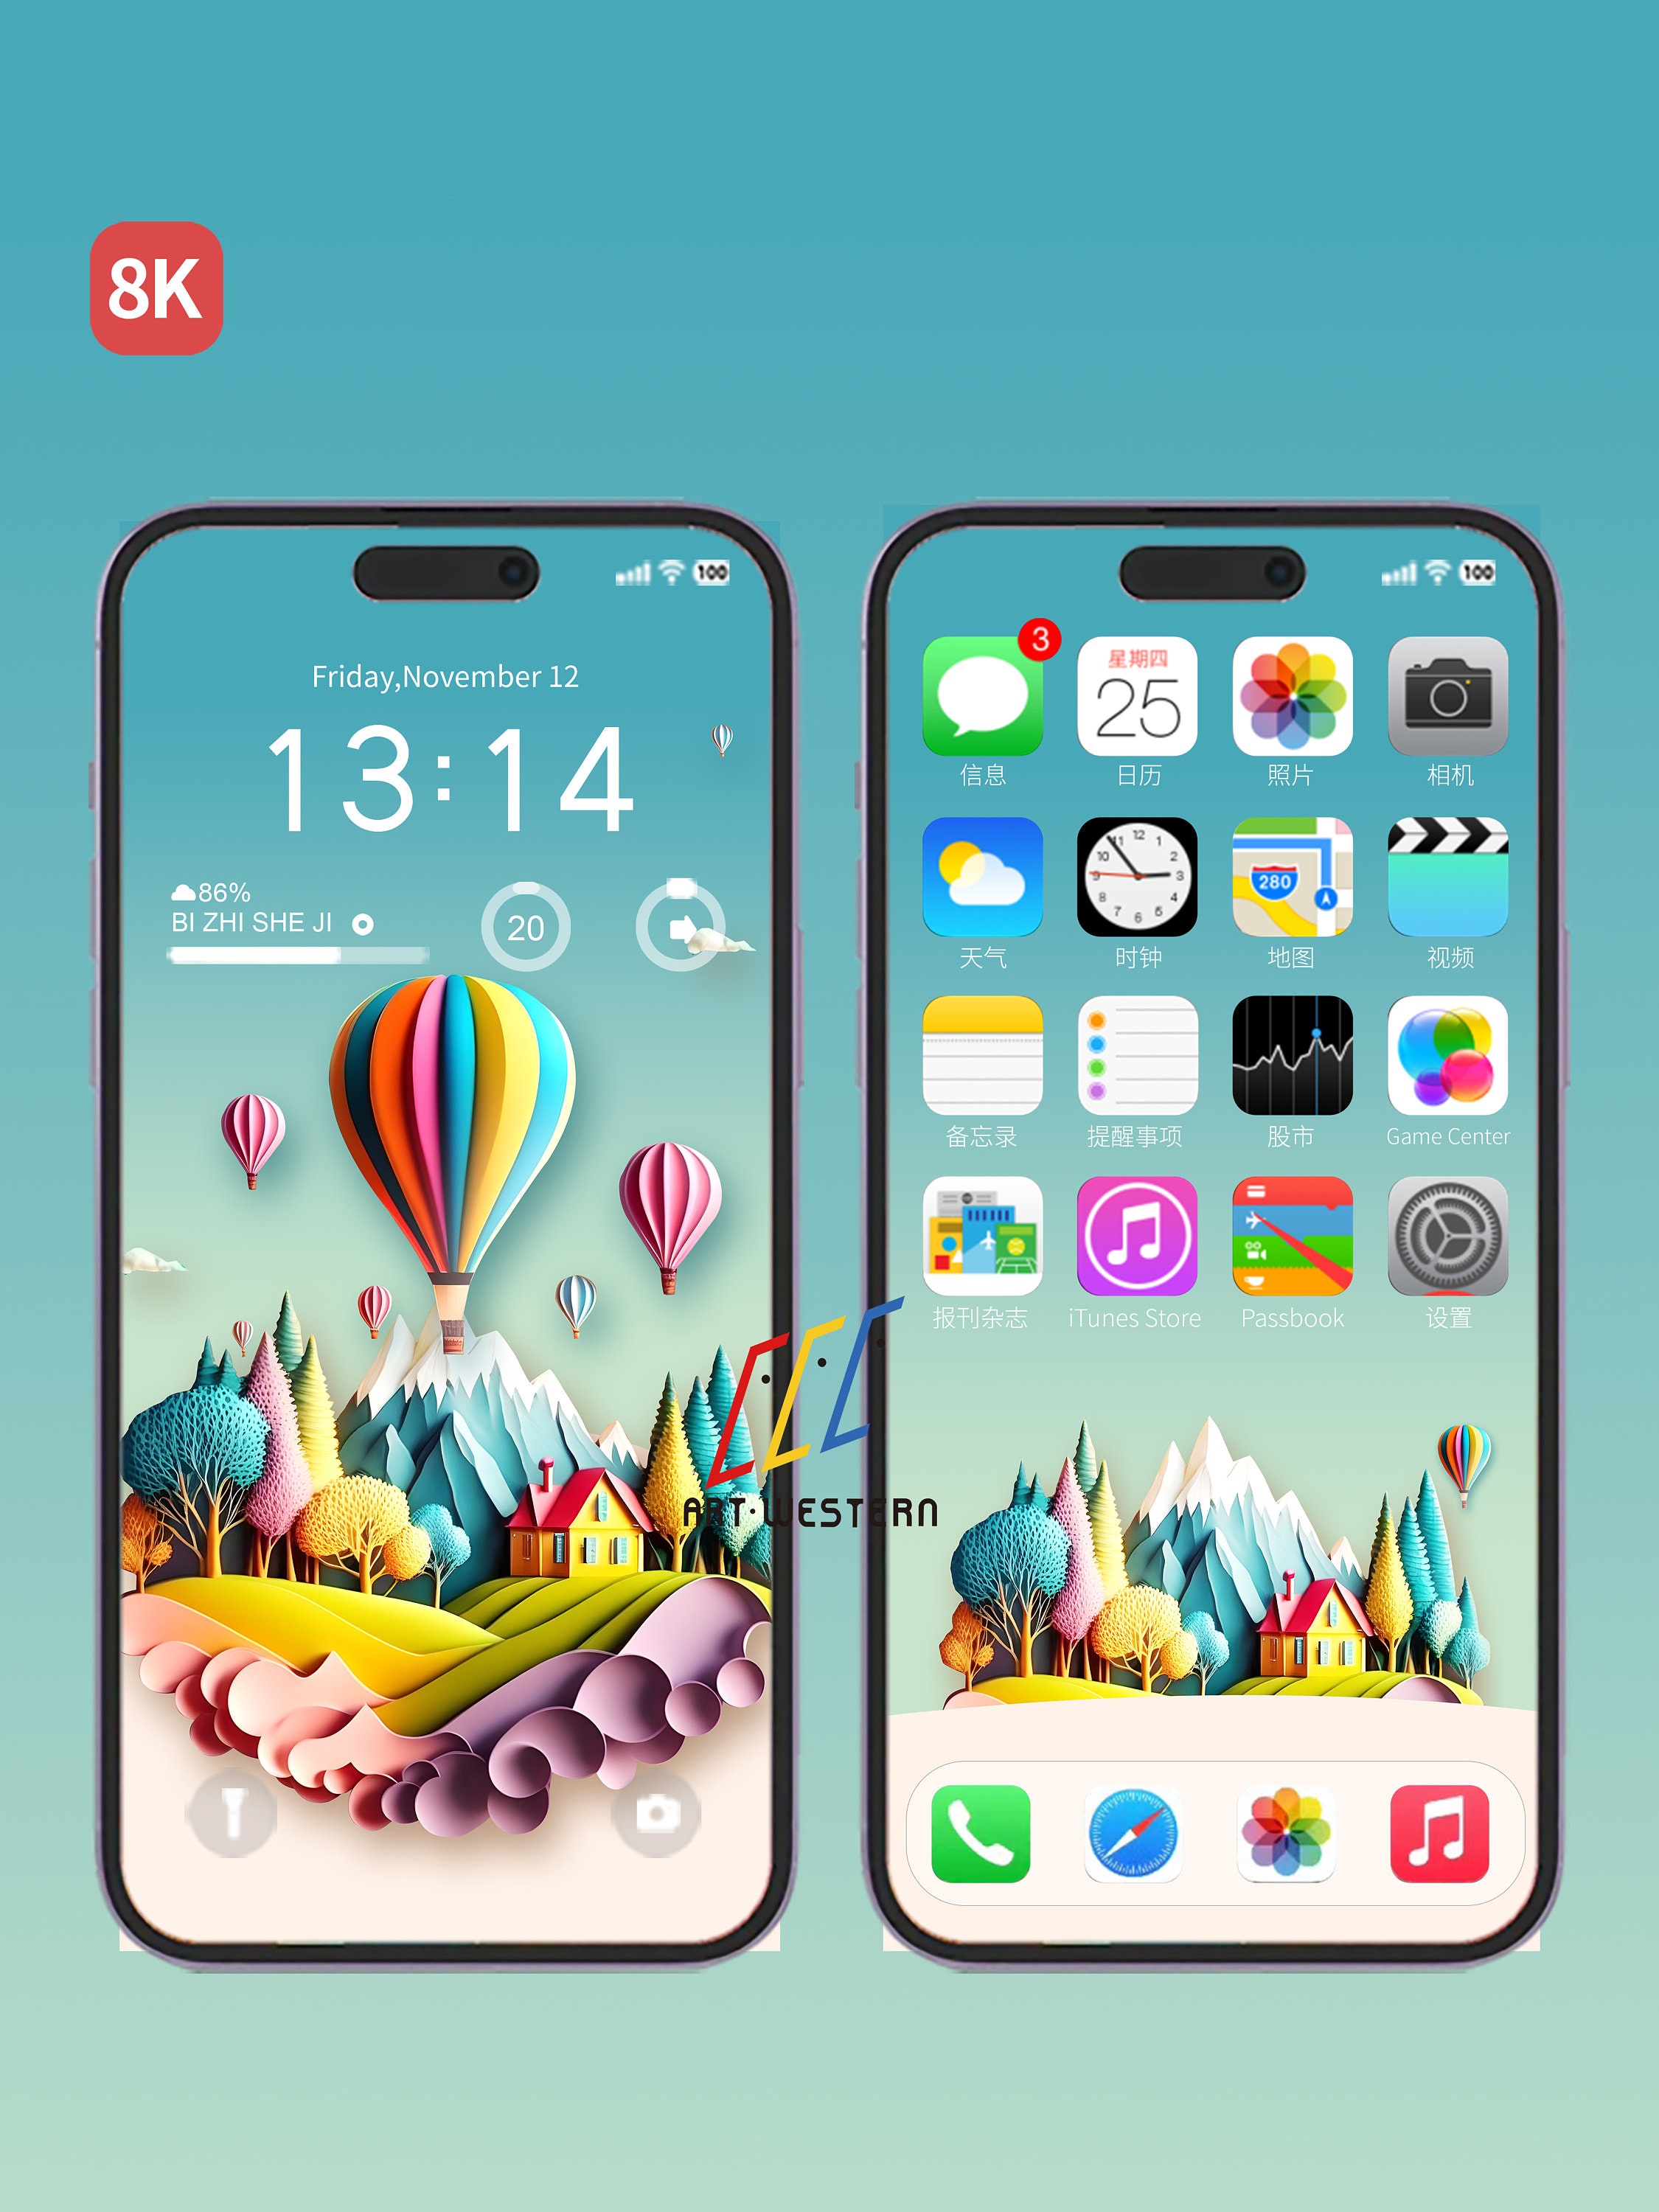 100+] 8k Iphone Wallpapers